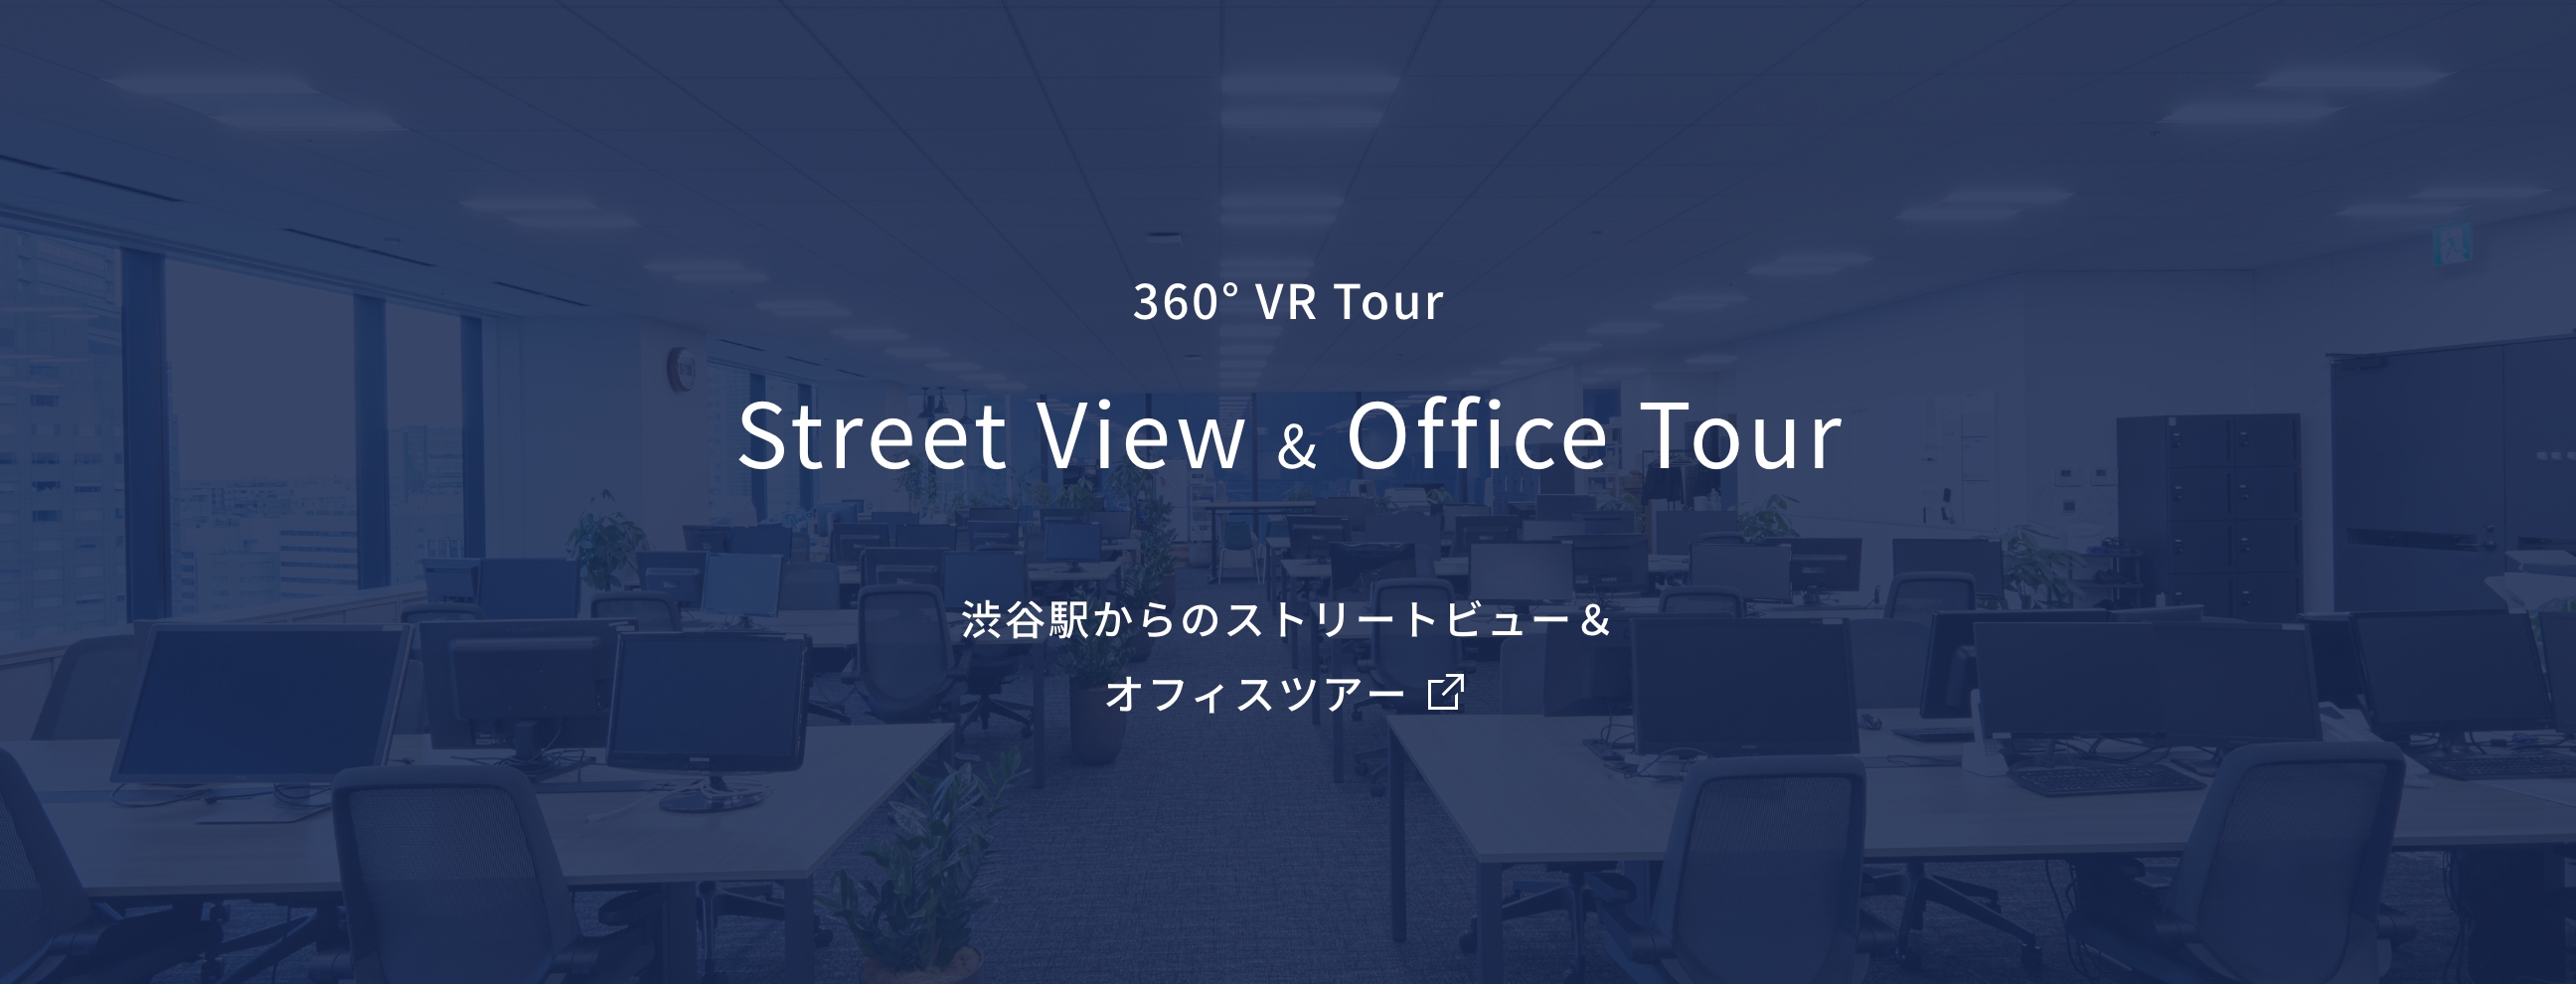 360° VR Tour Street View & Office Tour 渋谷駅からのストリートビュー＆オフィスツアー